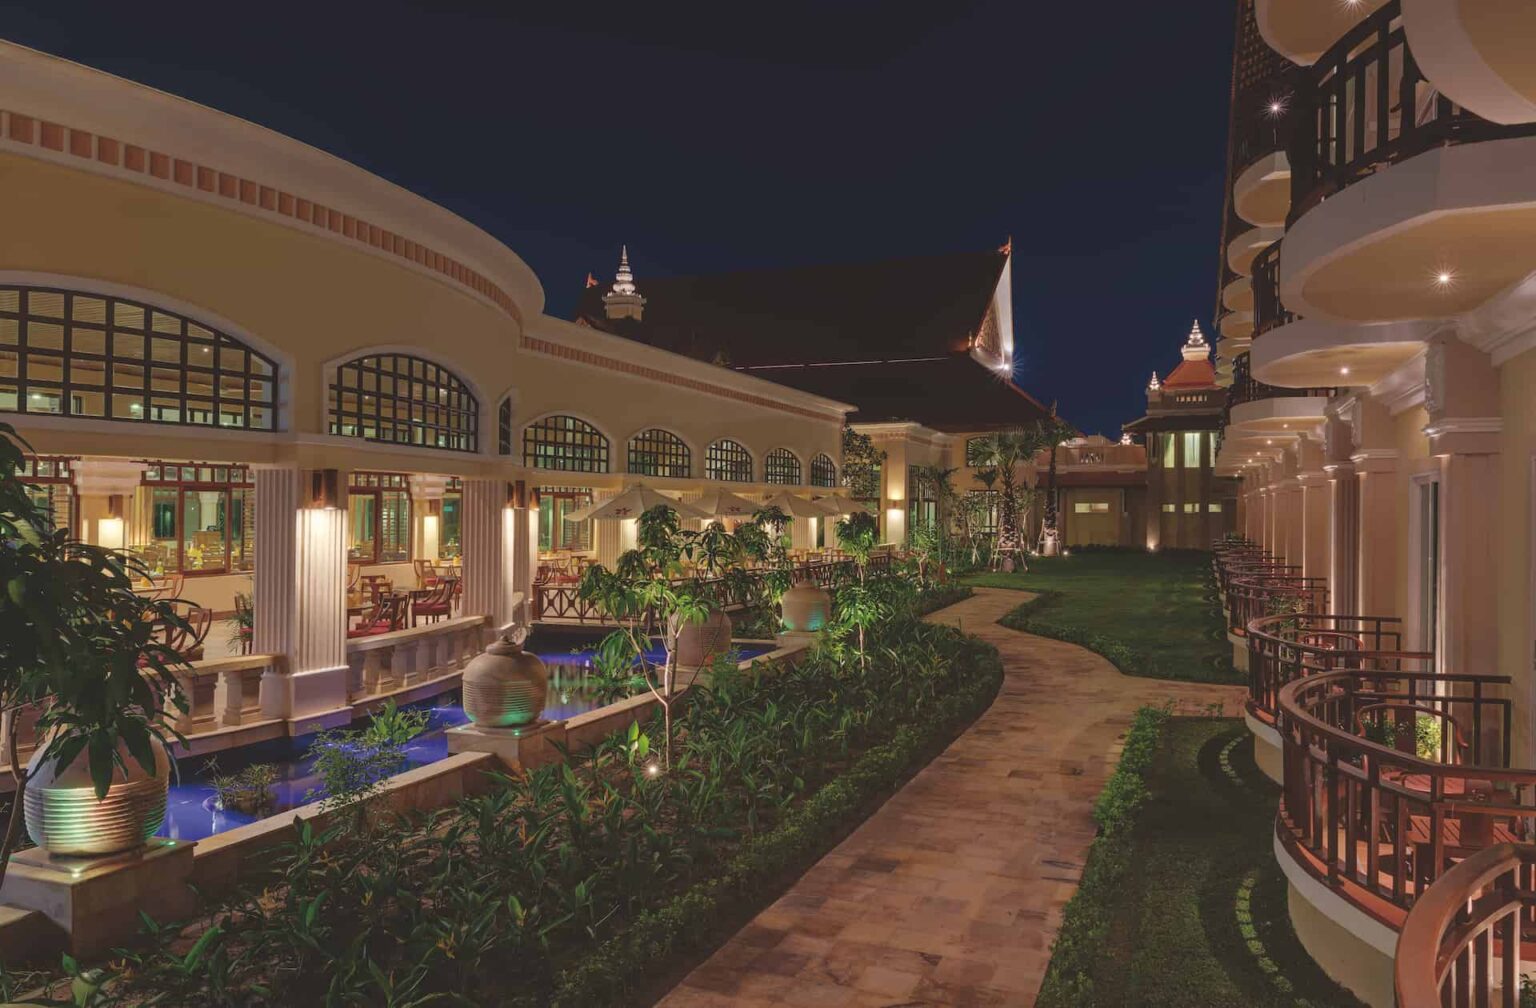 Sokha Siem Reap Resort hotel building and gardens at night